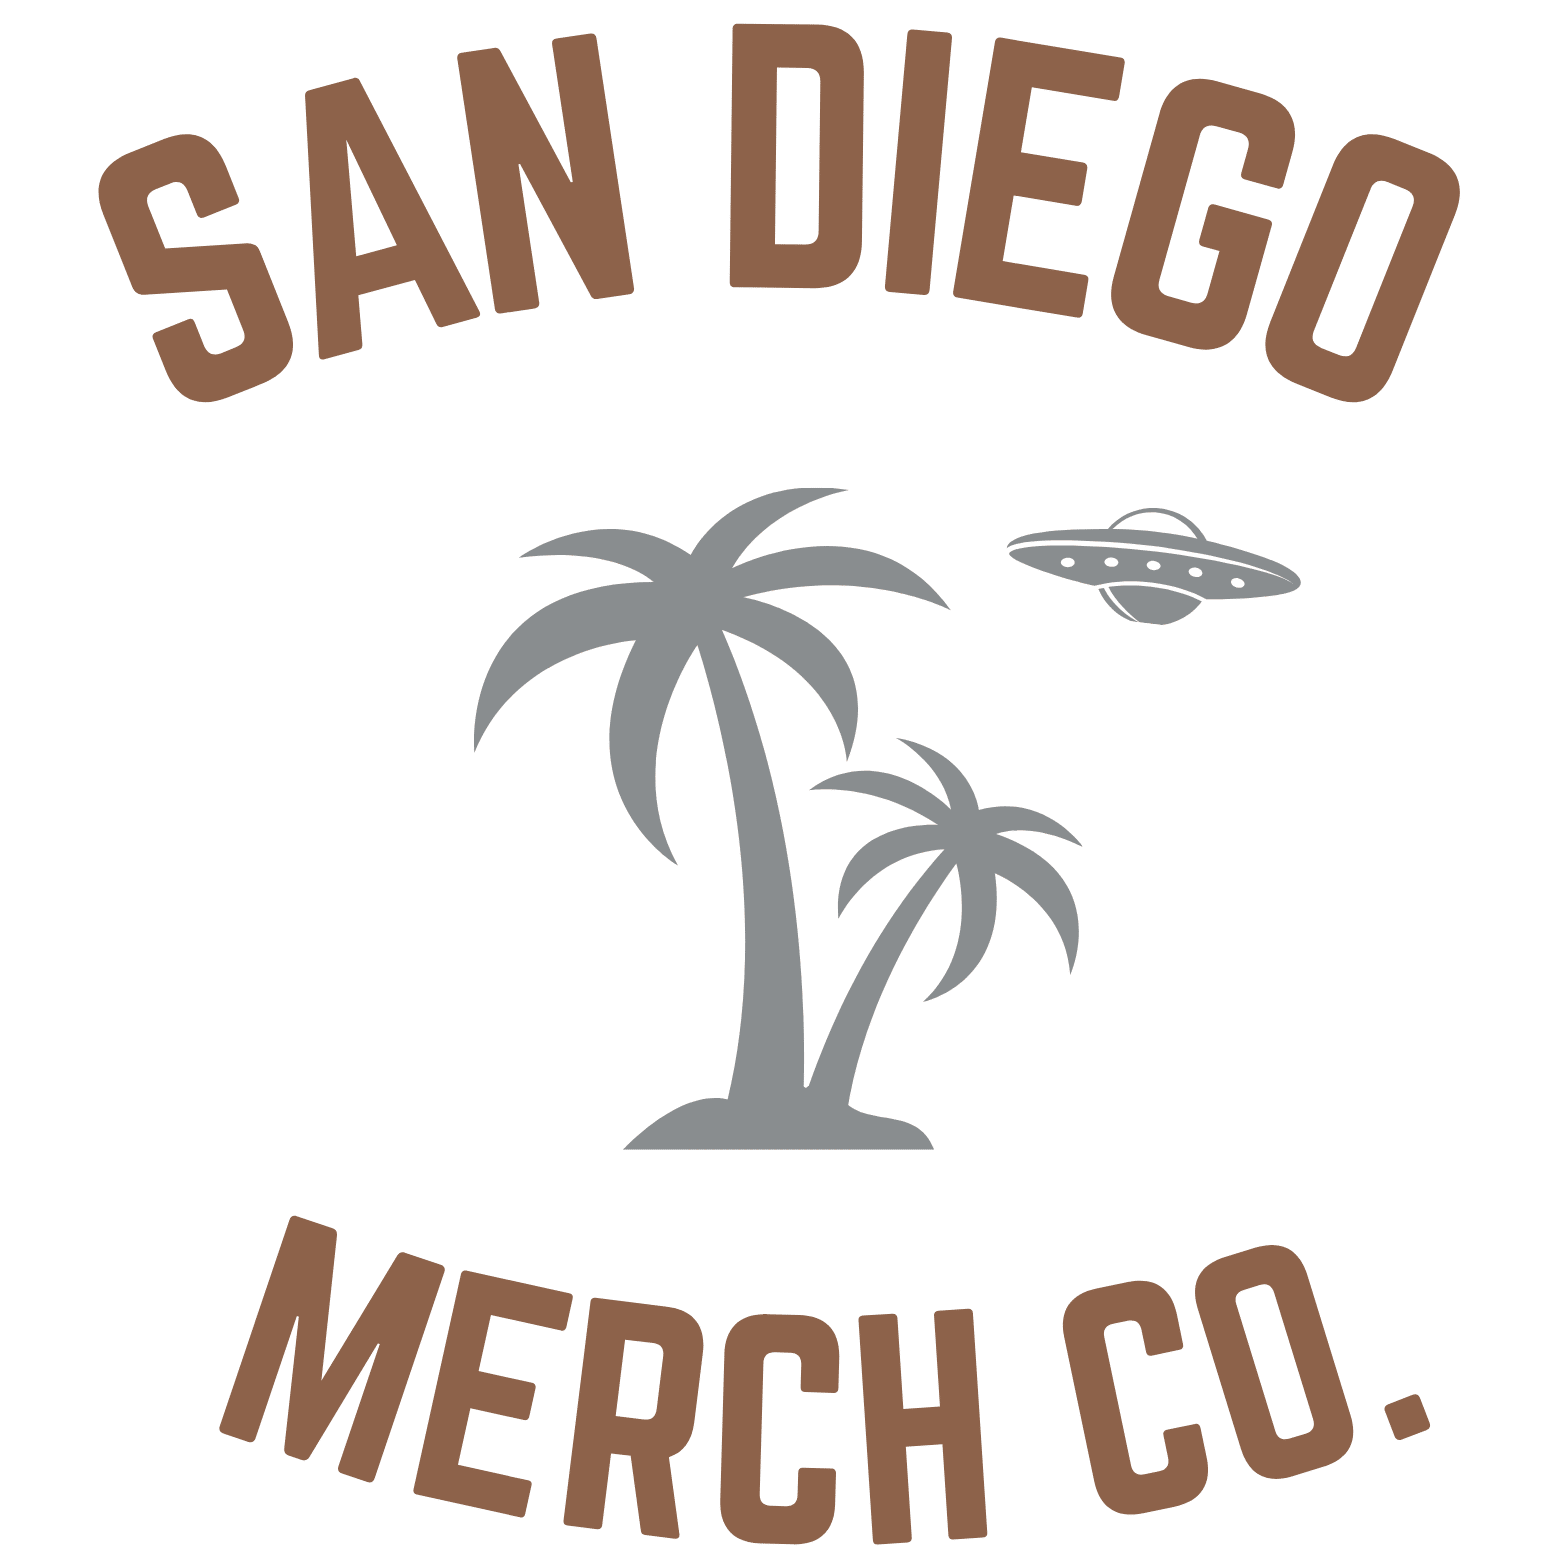 San diego merchandise co logo.